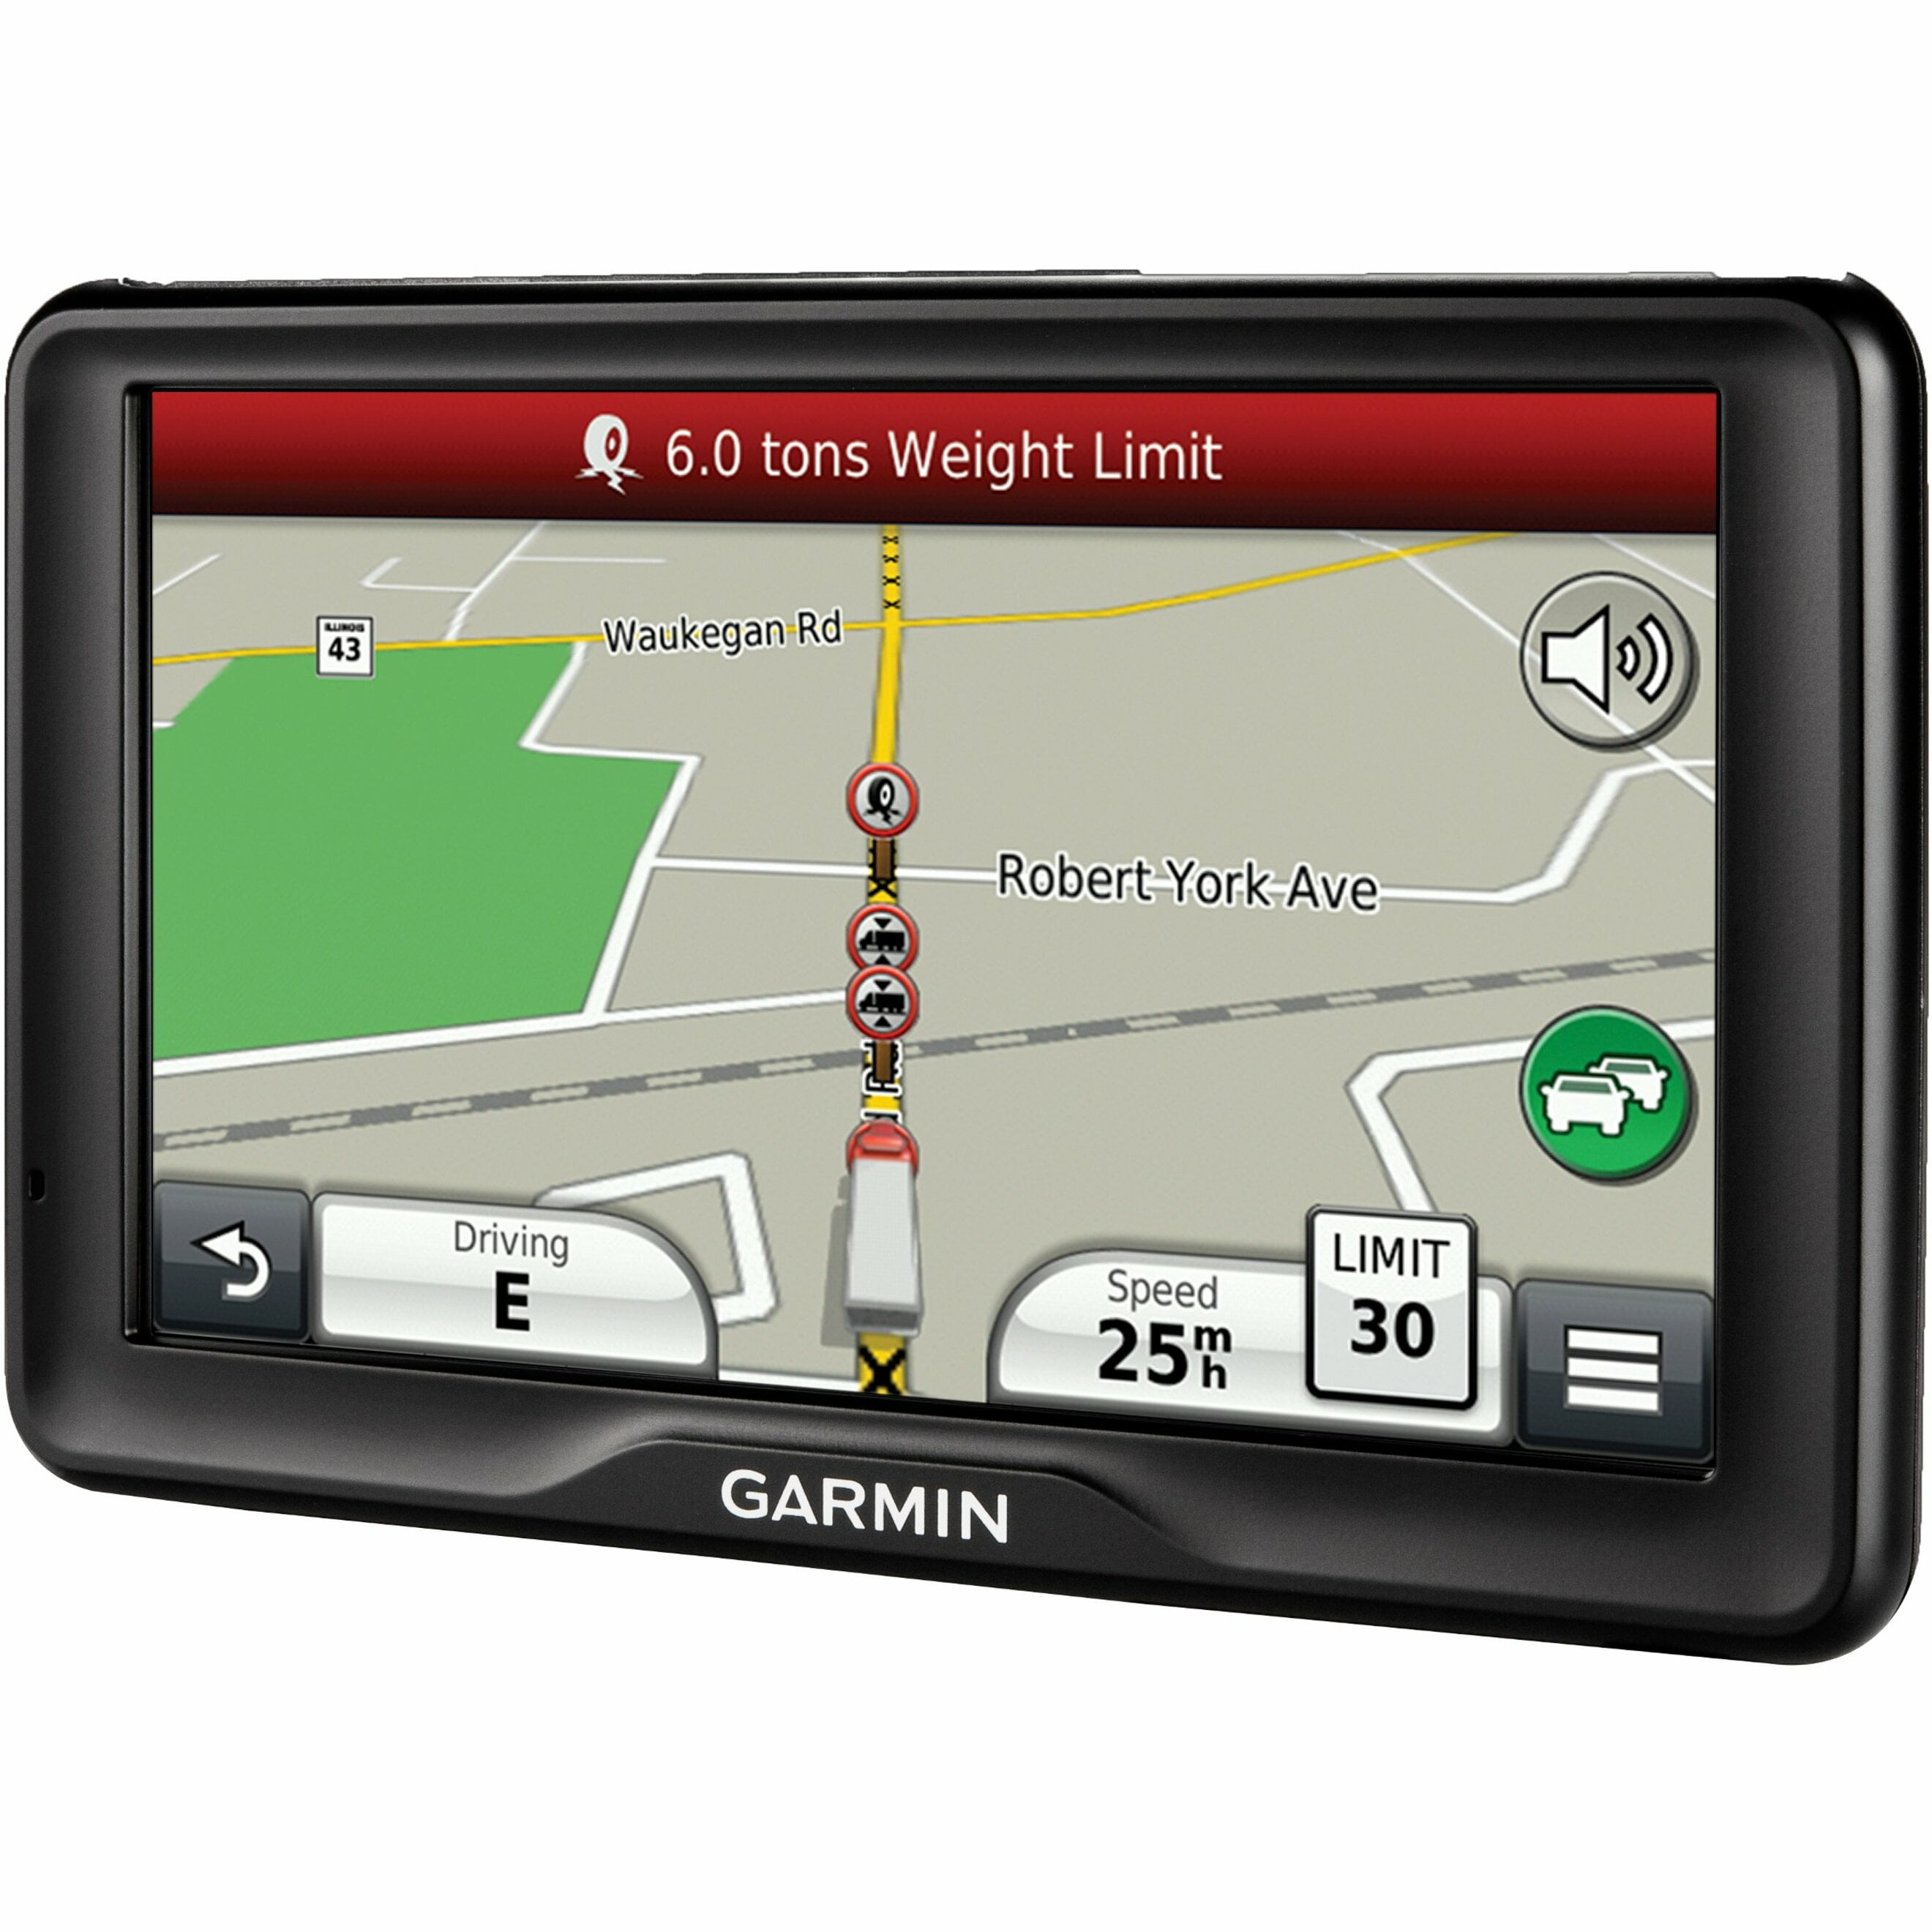 Garmin 760LMT Automobile Navigator - Walmart.com